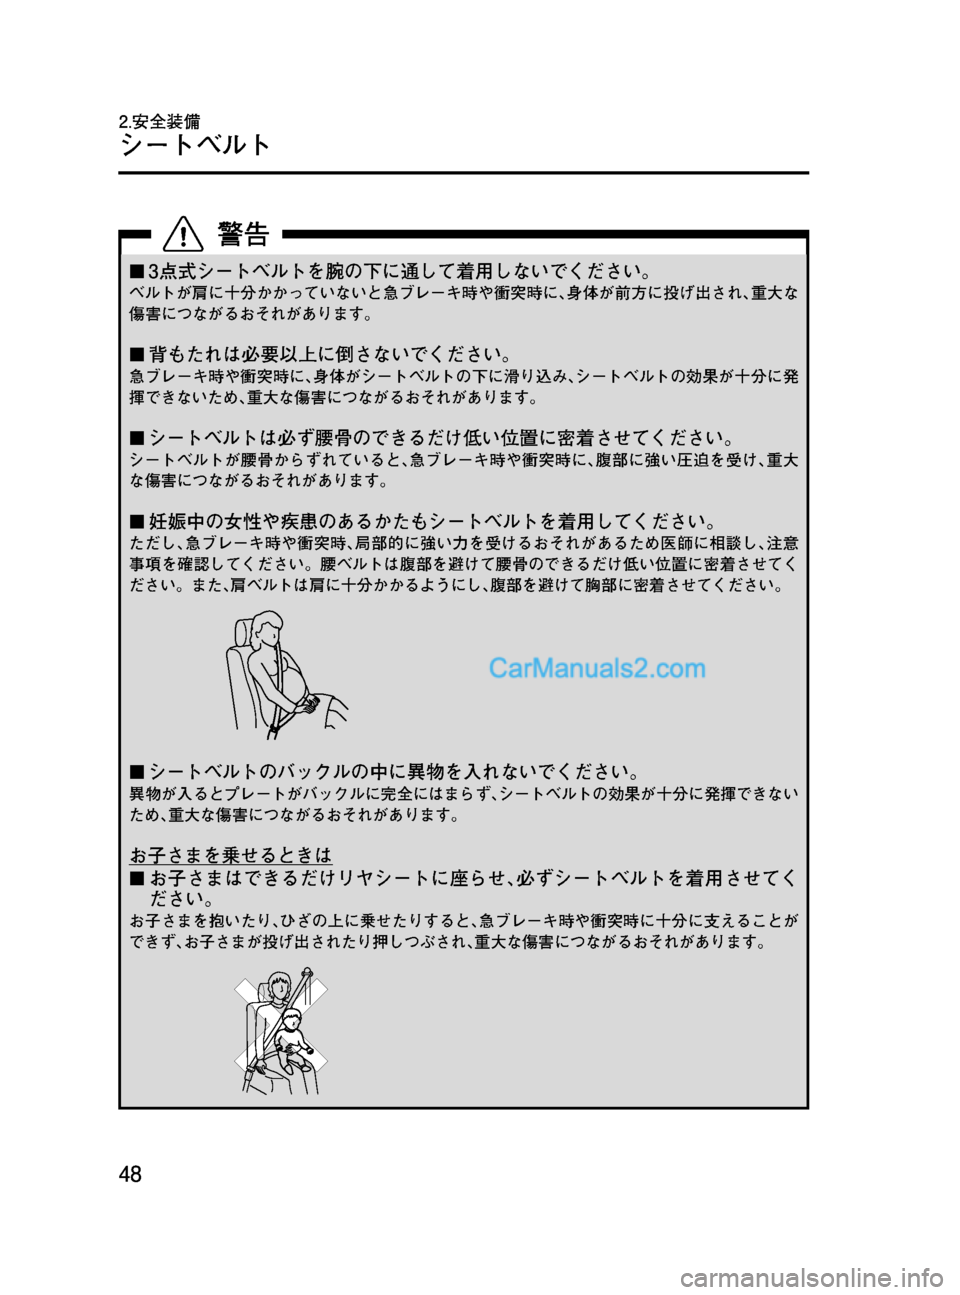 MAZDA MODEL VERISA 2007  ベリーサ｜取扱説明書 (in Japanese) Black plate (48,1)
¢3点式シートベルトを腕の下に通して着用しないでください。
ベルトが肩に十分かかっていないと急ブレーキ時や衝突時に､身体が前